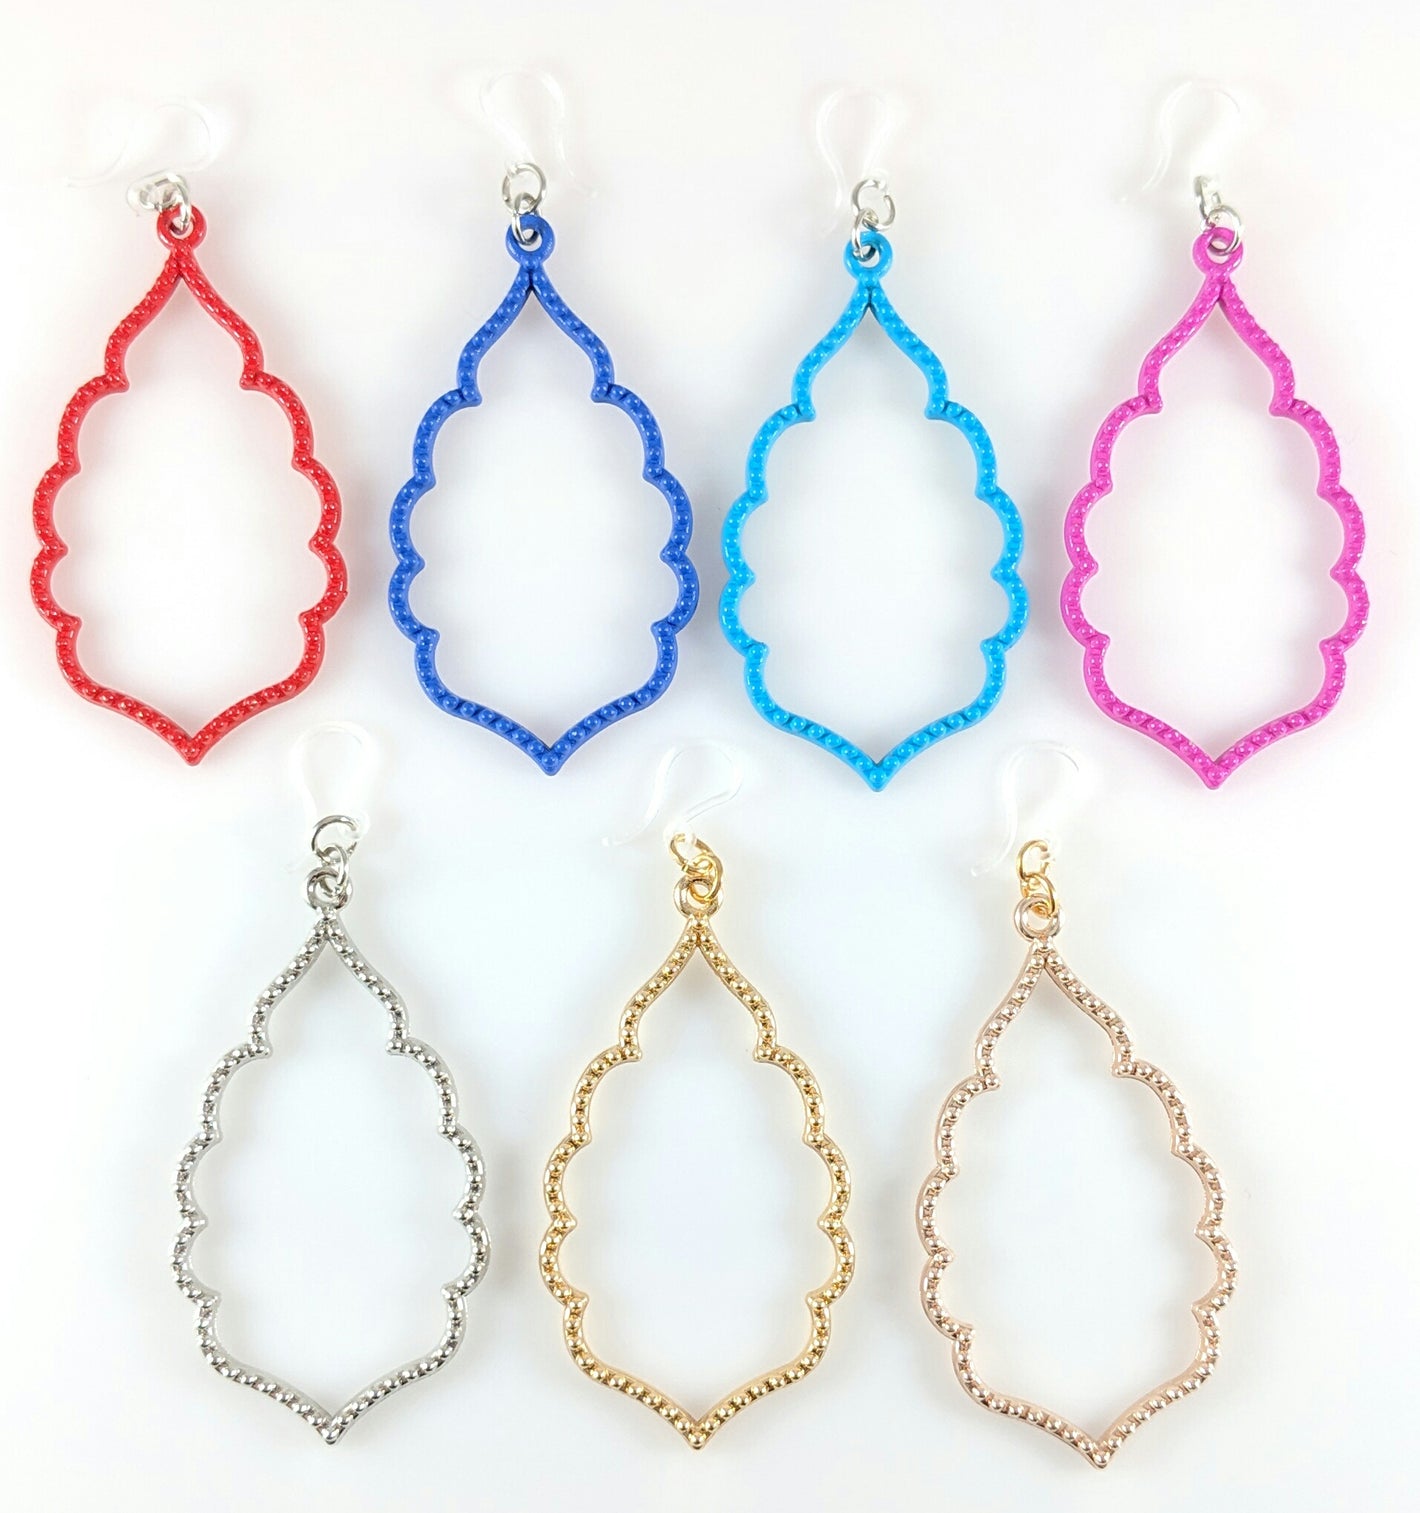 Bubble Chandelier Earrings (Dangles) - various colors